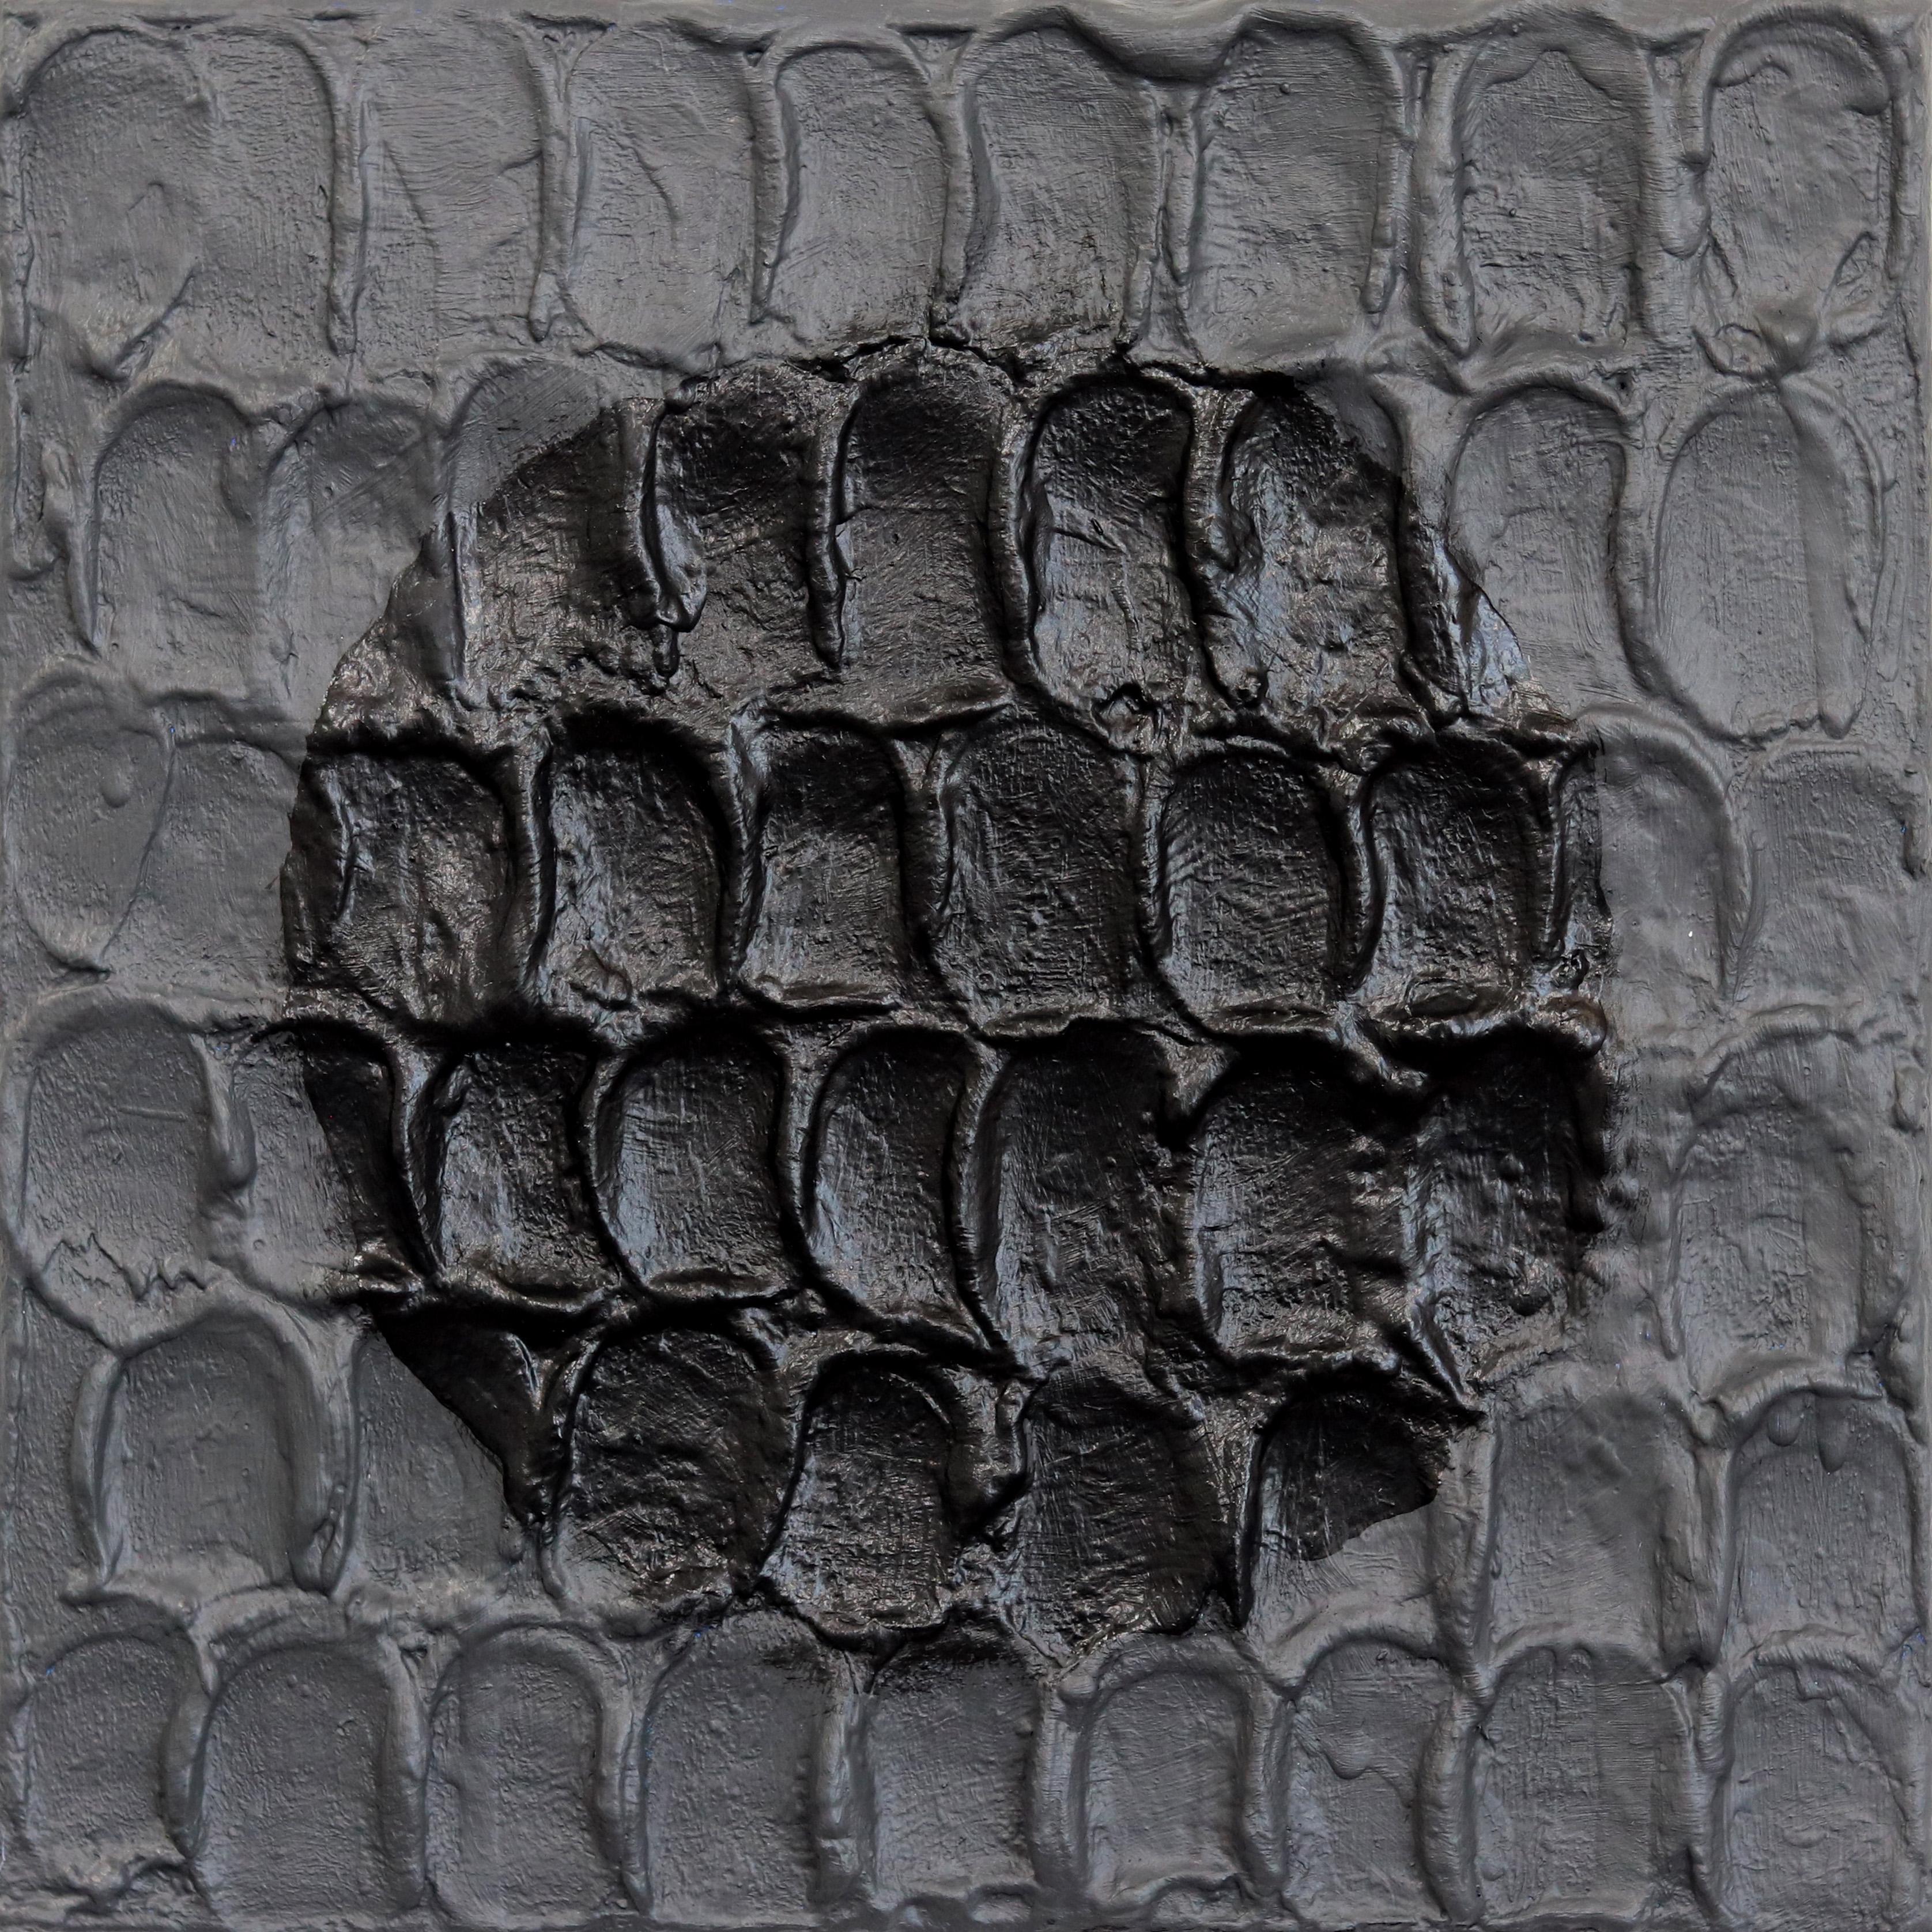 Primitive Modern #2 - Black Textural Abstract Minimalist Artwork on Canvas